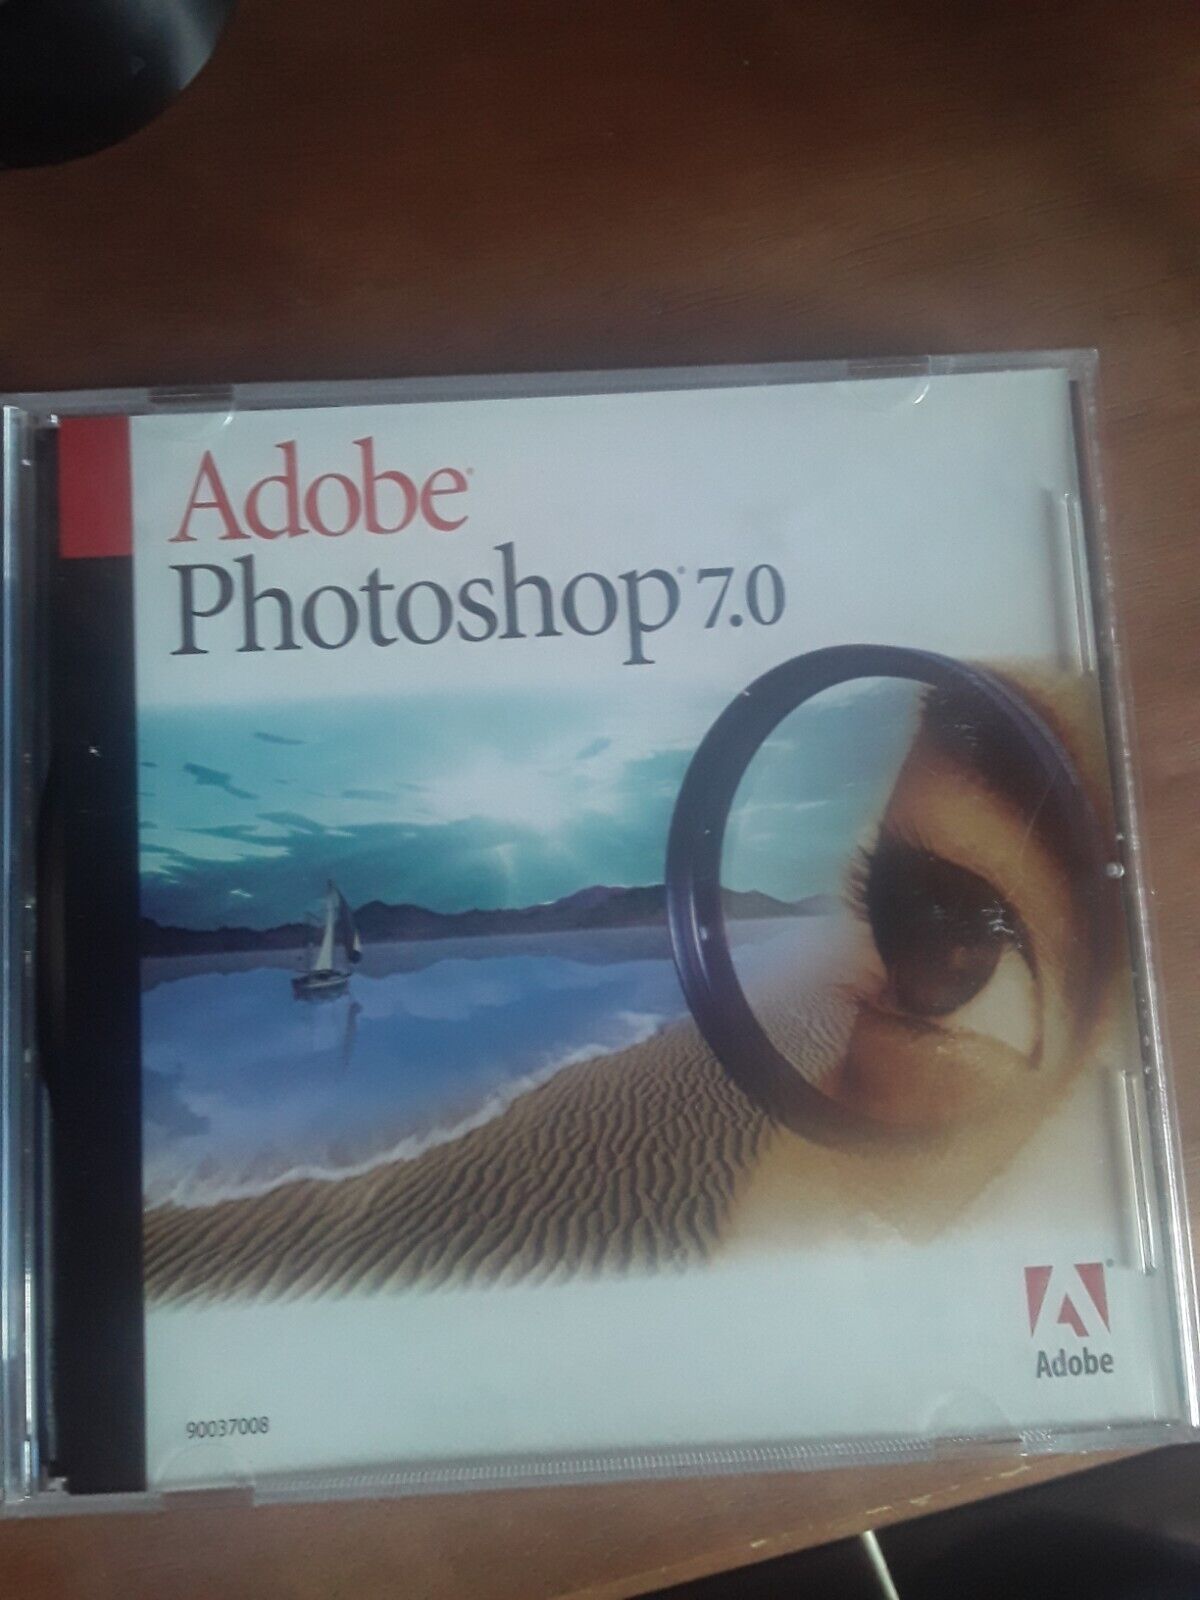 Adobe Photoshop 7.0 (1 User/s) - Upgrade for Windows 